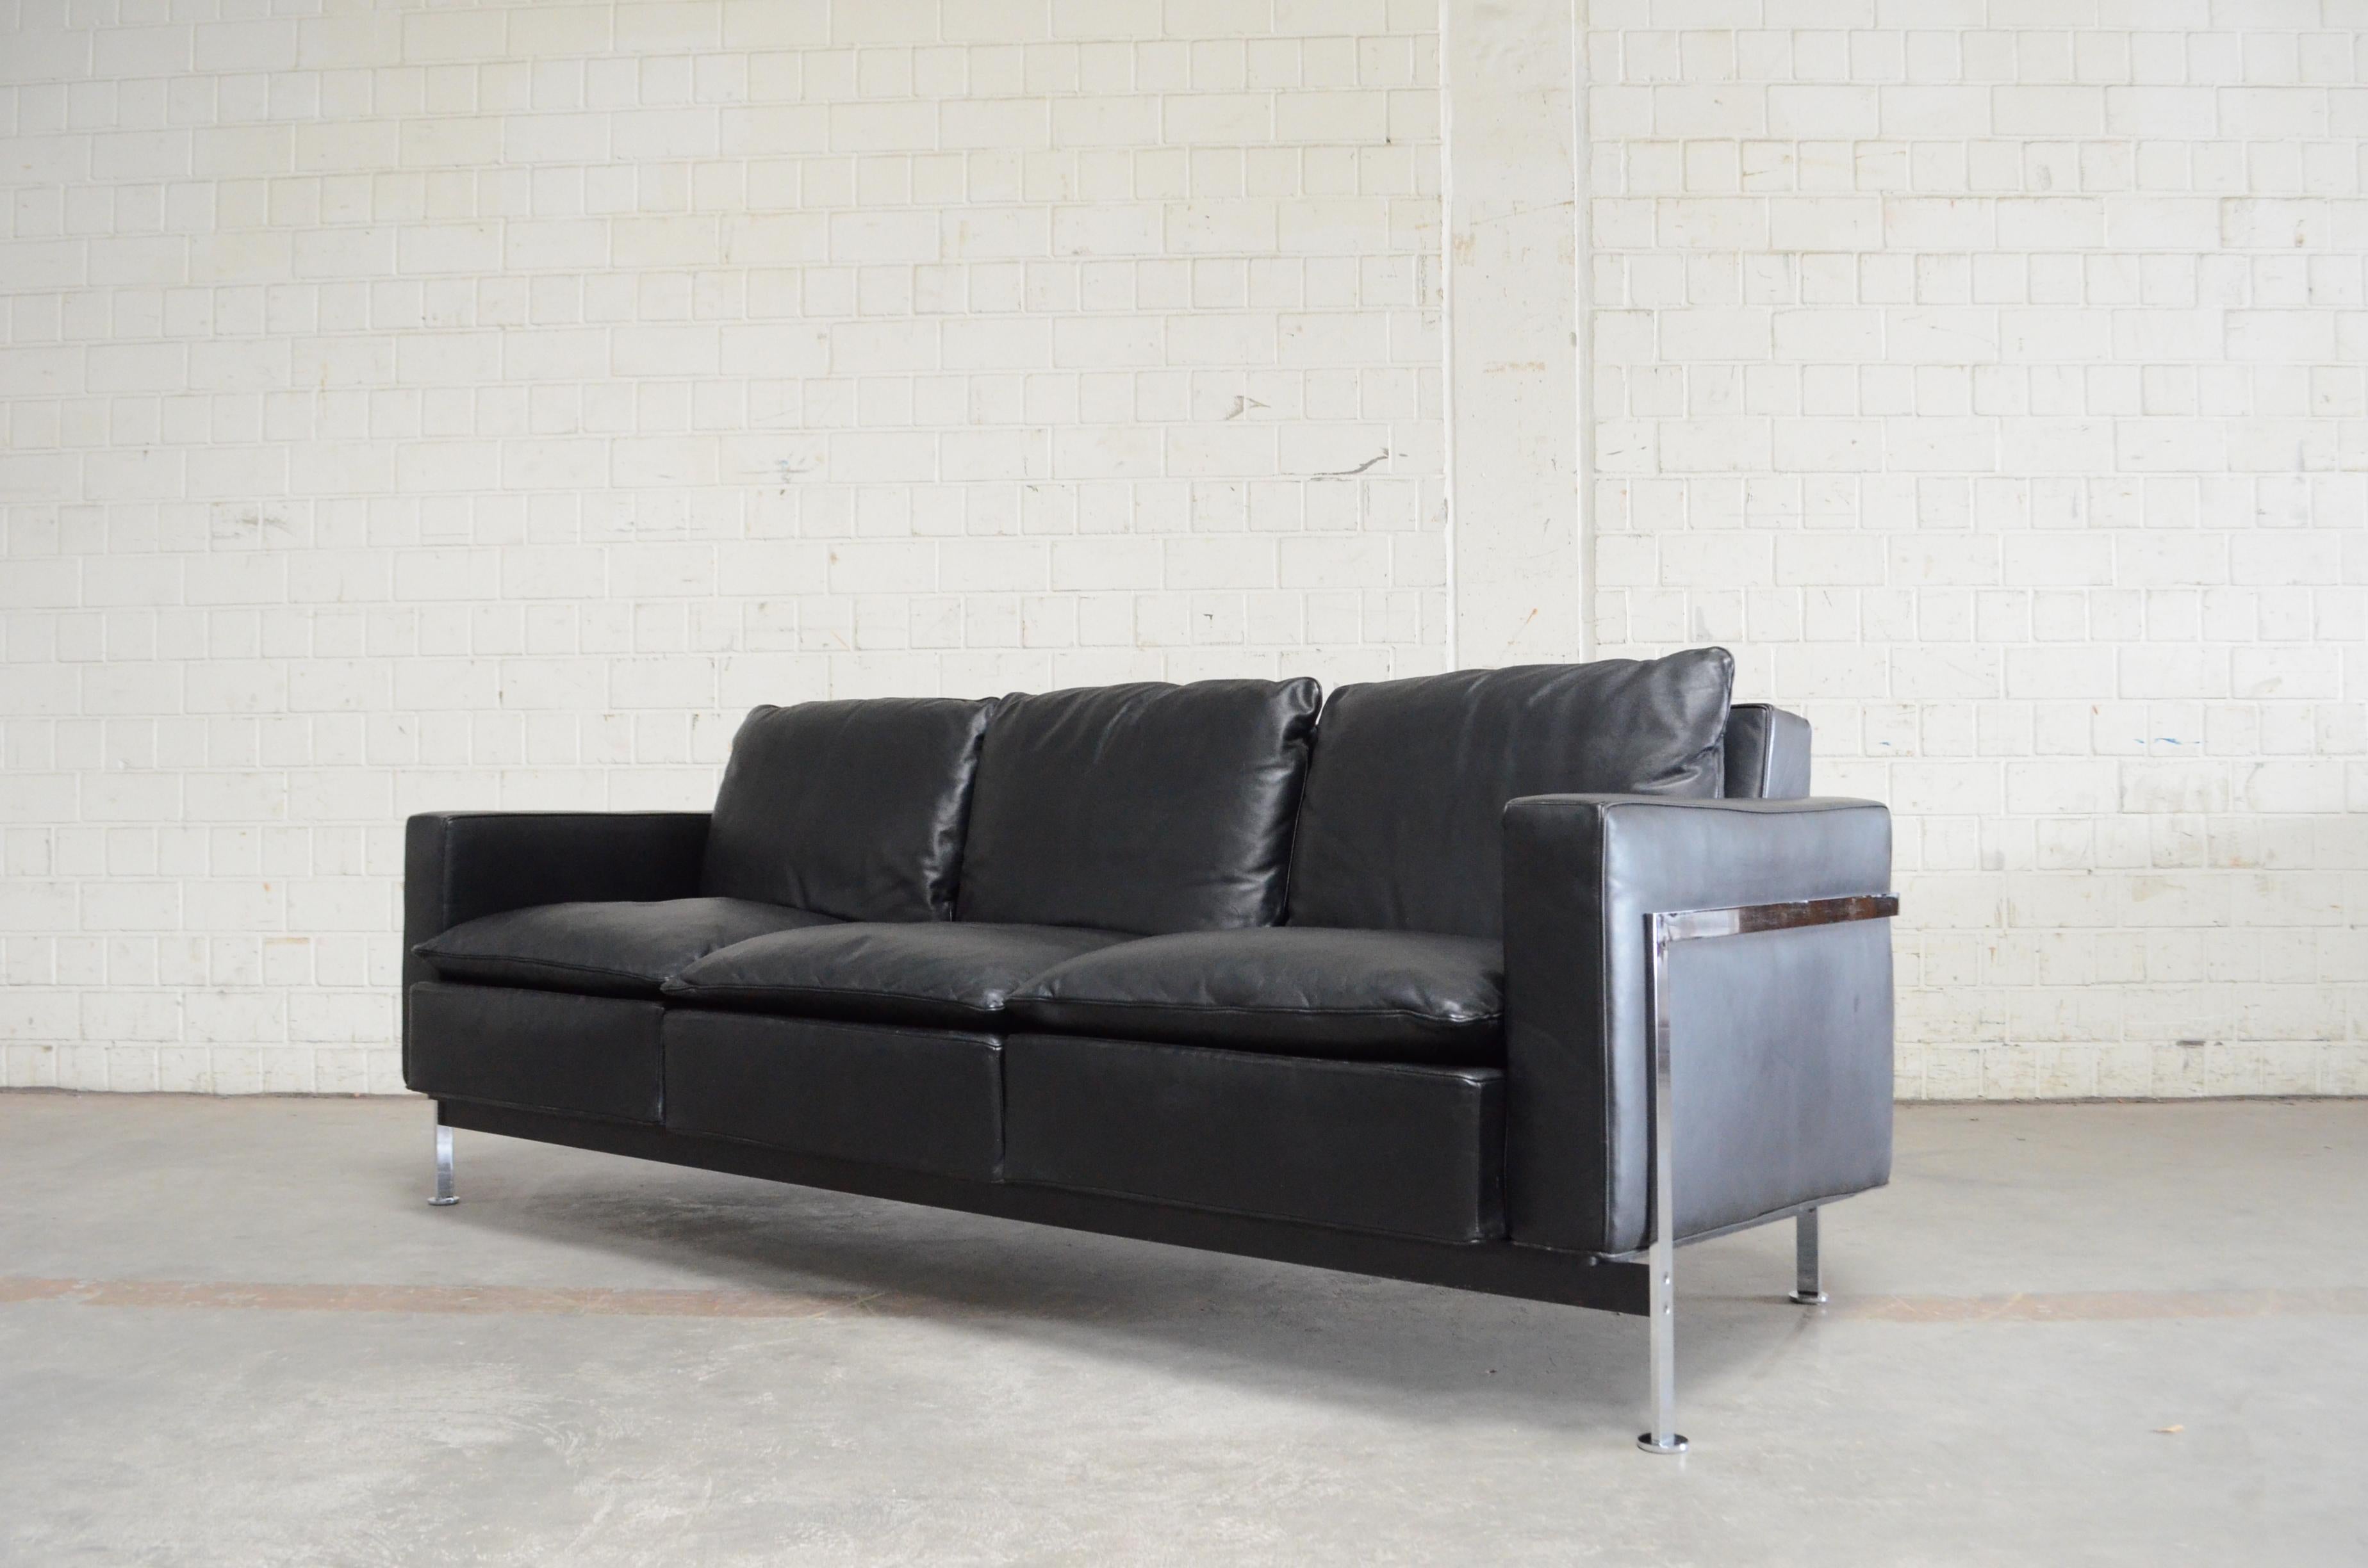 Robert Haussmann for Hans Kaufeld or De Sede RH 302 Leather Sofa First Edition For Sale 2